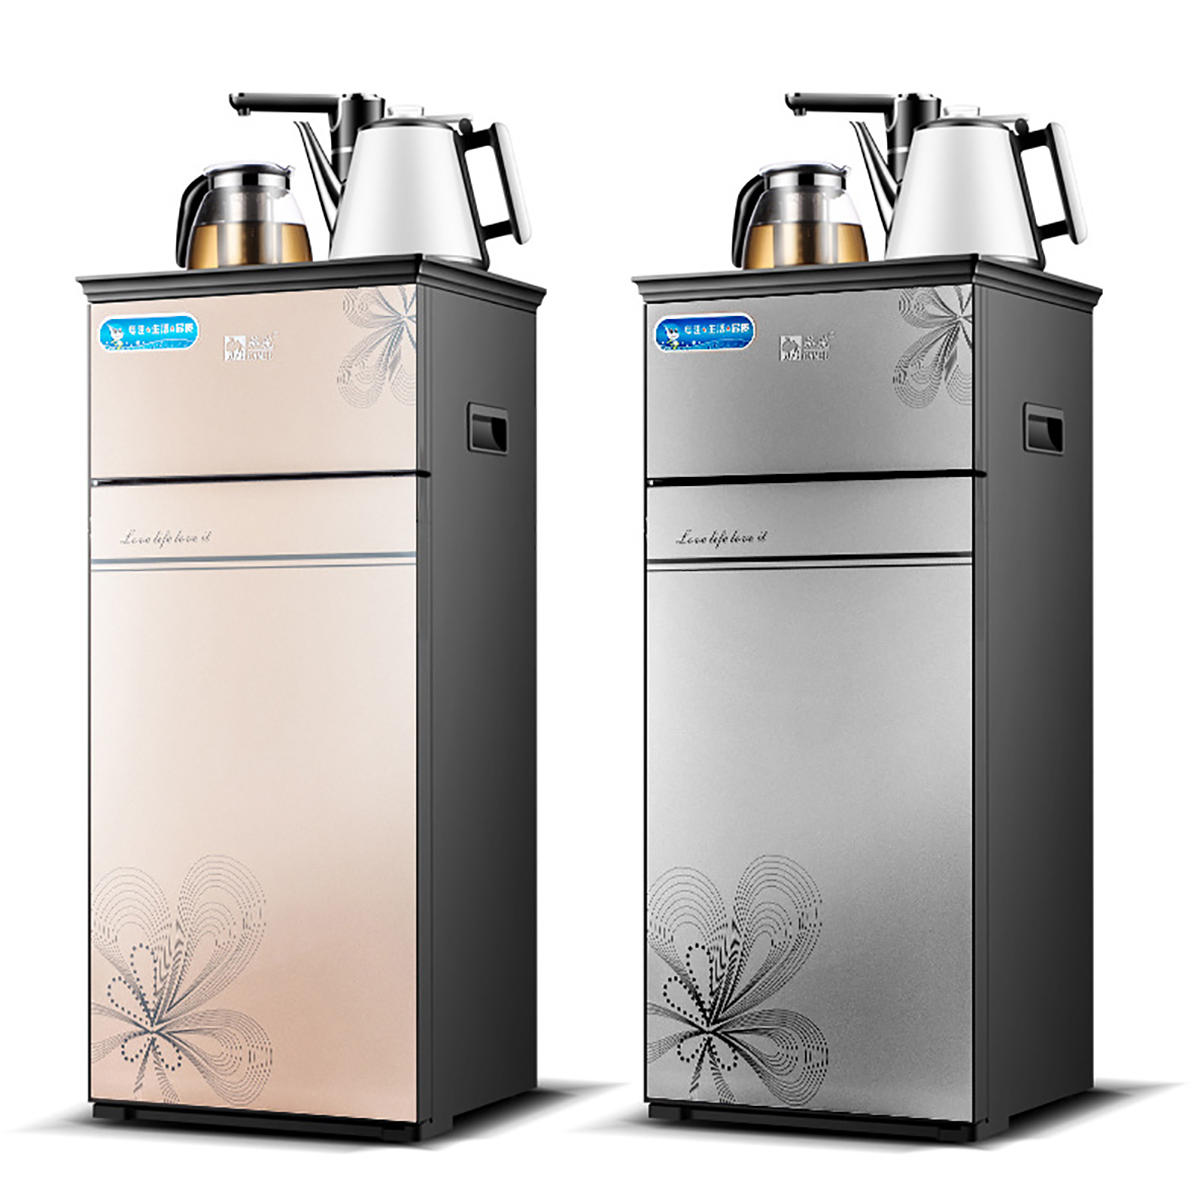 

Tea Bar Machine Warm and Hot Water Dispenser Hot Wayer for Coffee Drink Dispenser Two Door Gallon Water Pumping Device